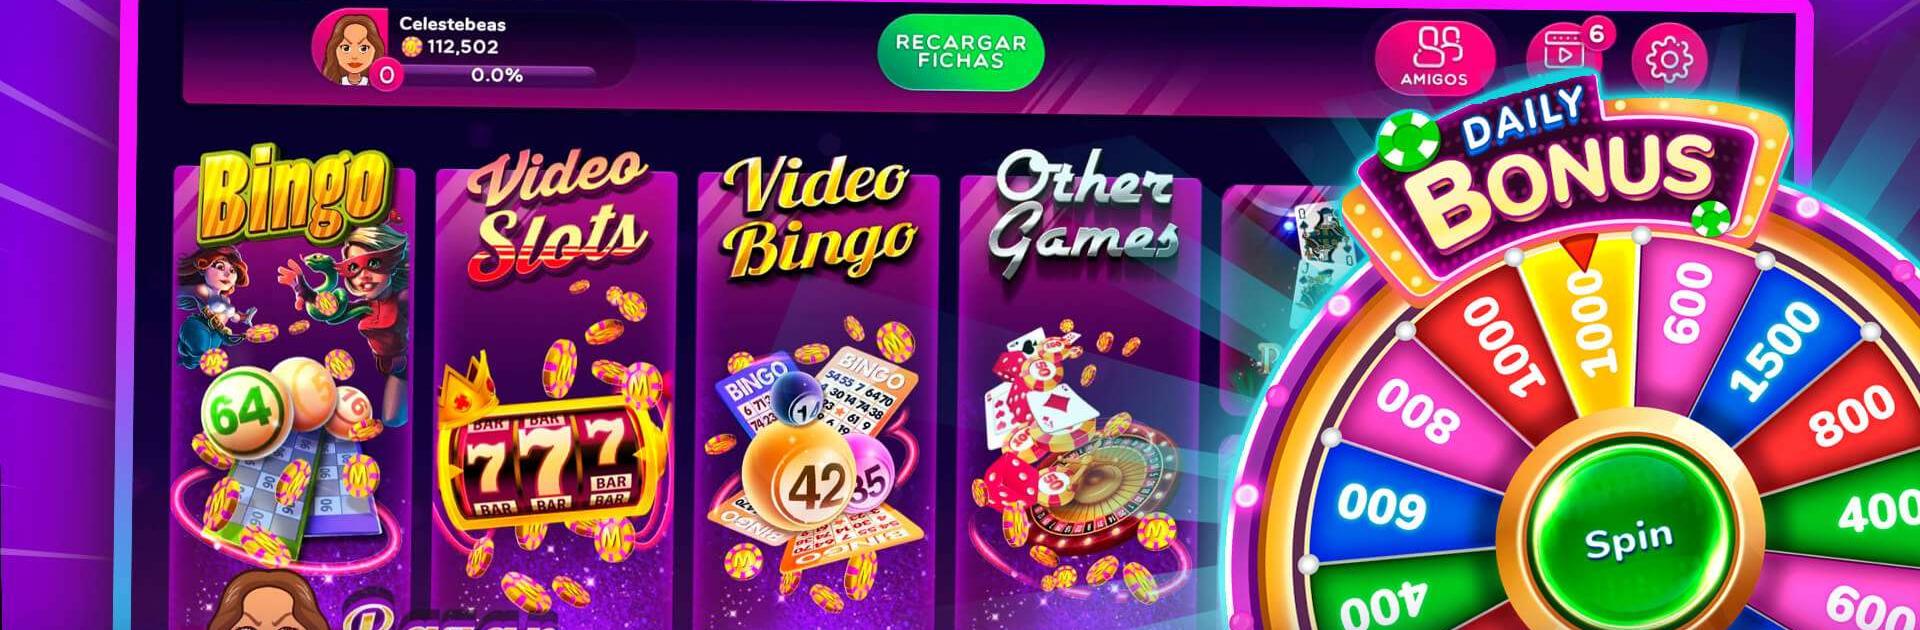 MundiGames - Slots, Bingo, Poker, Blackjack & more